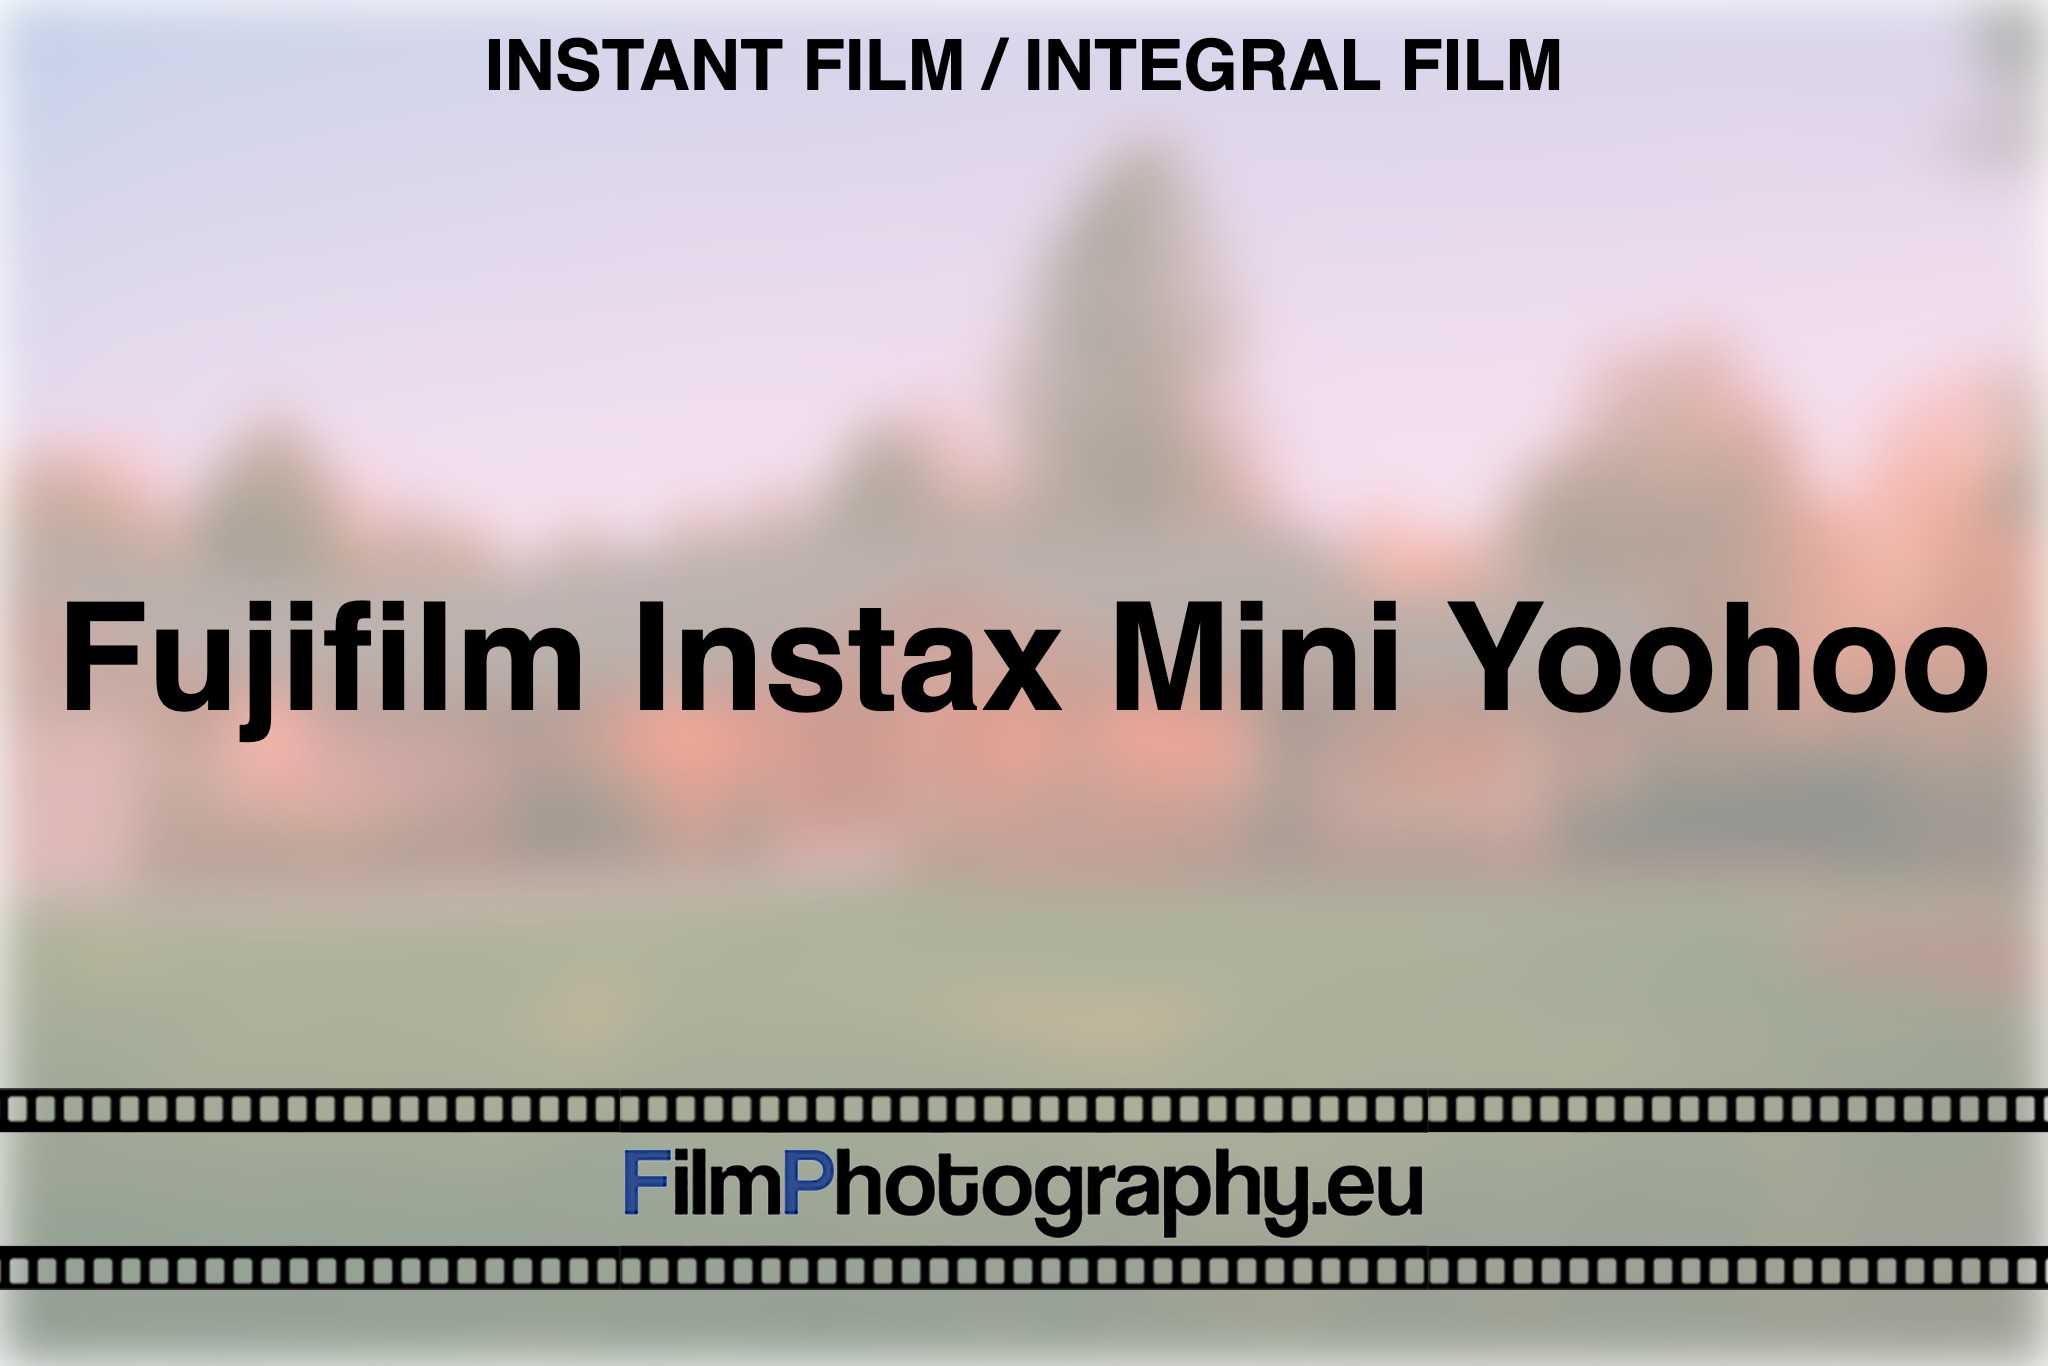 fujifilm-instax-mini-yoohoo-instant-film-integral-film-bnv